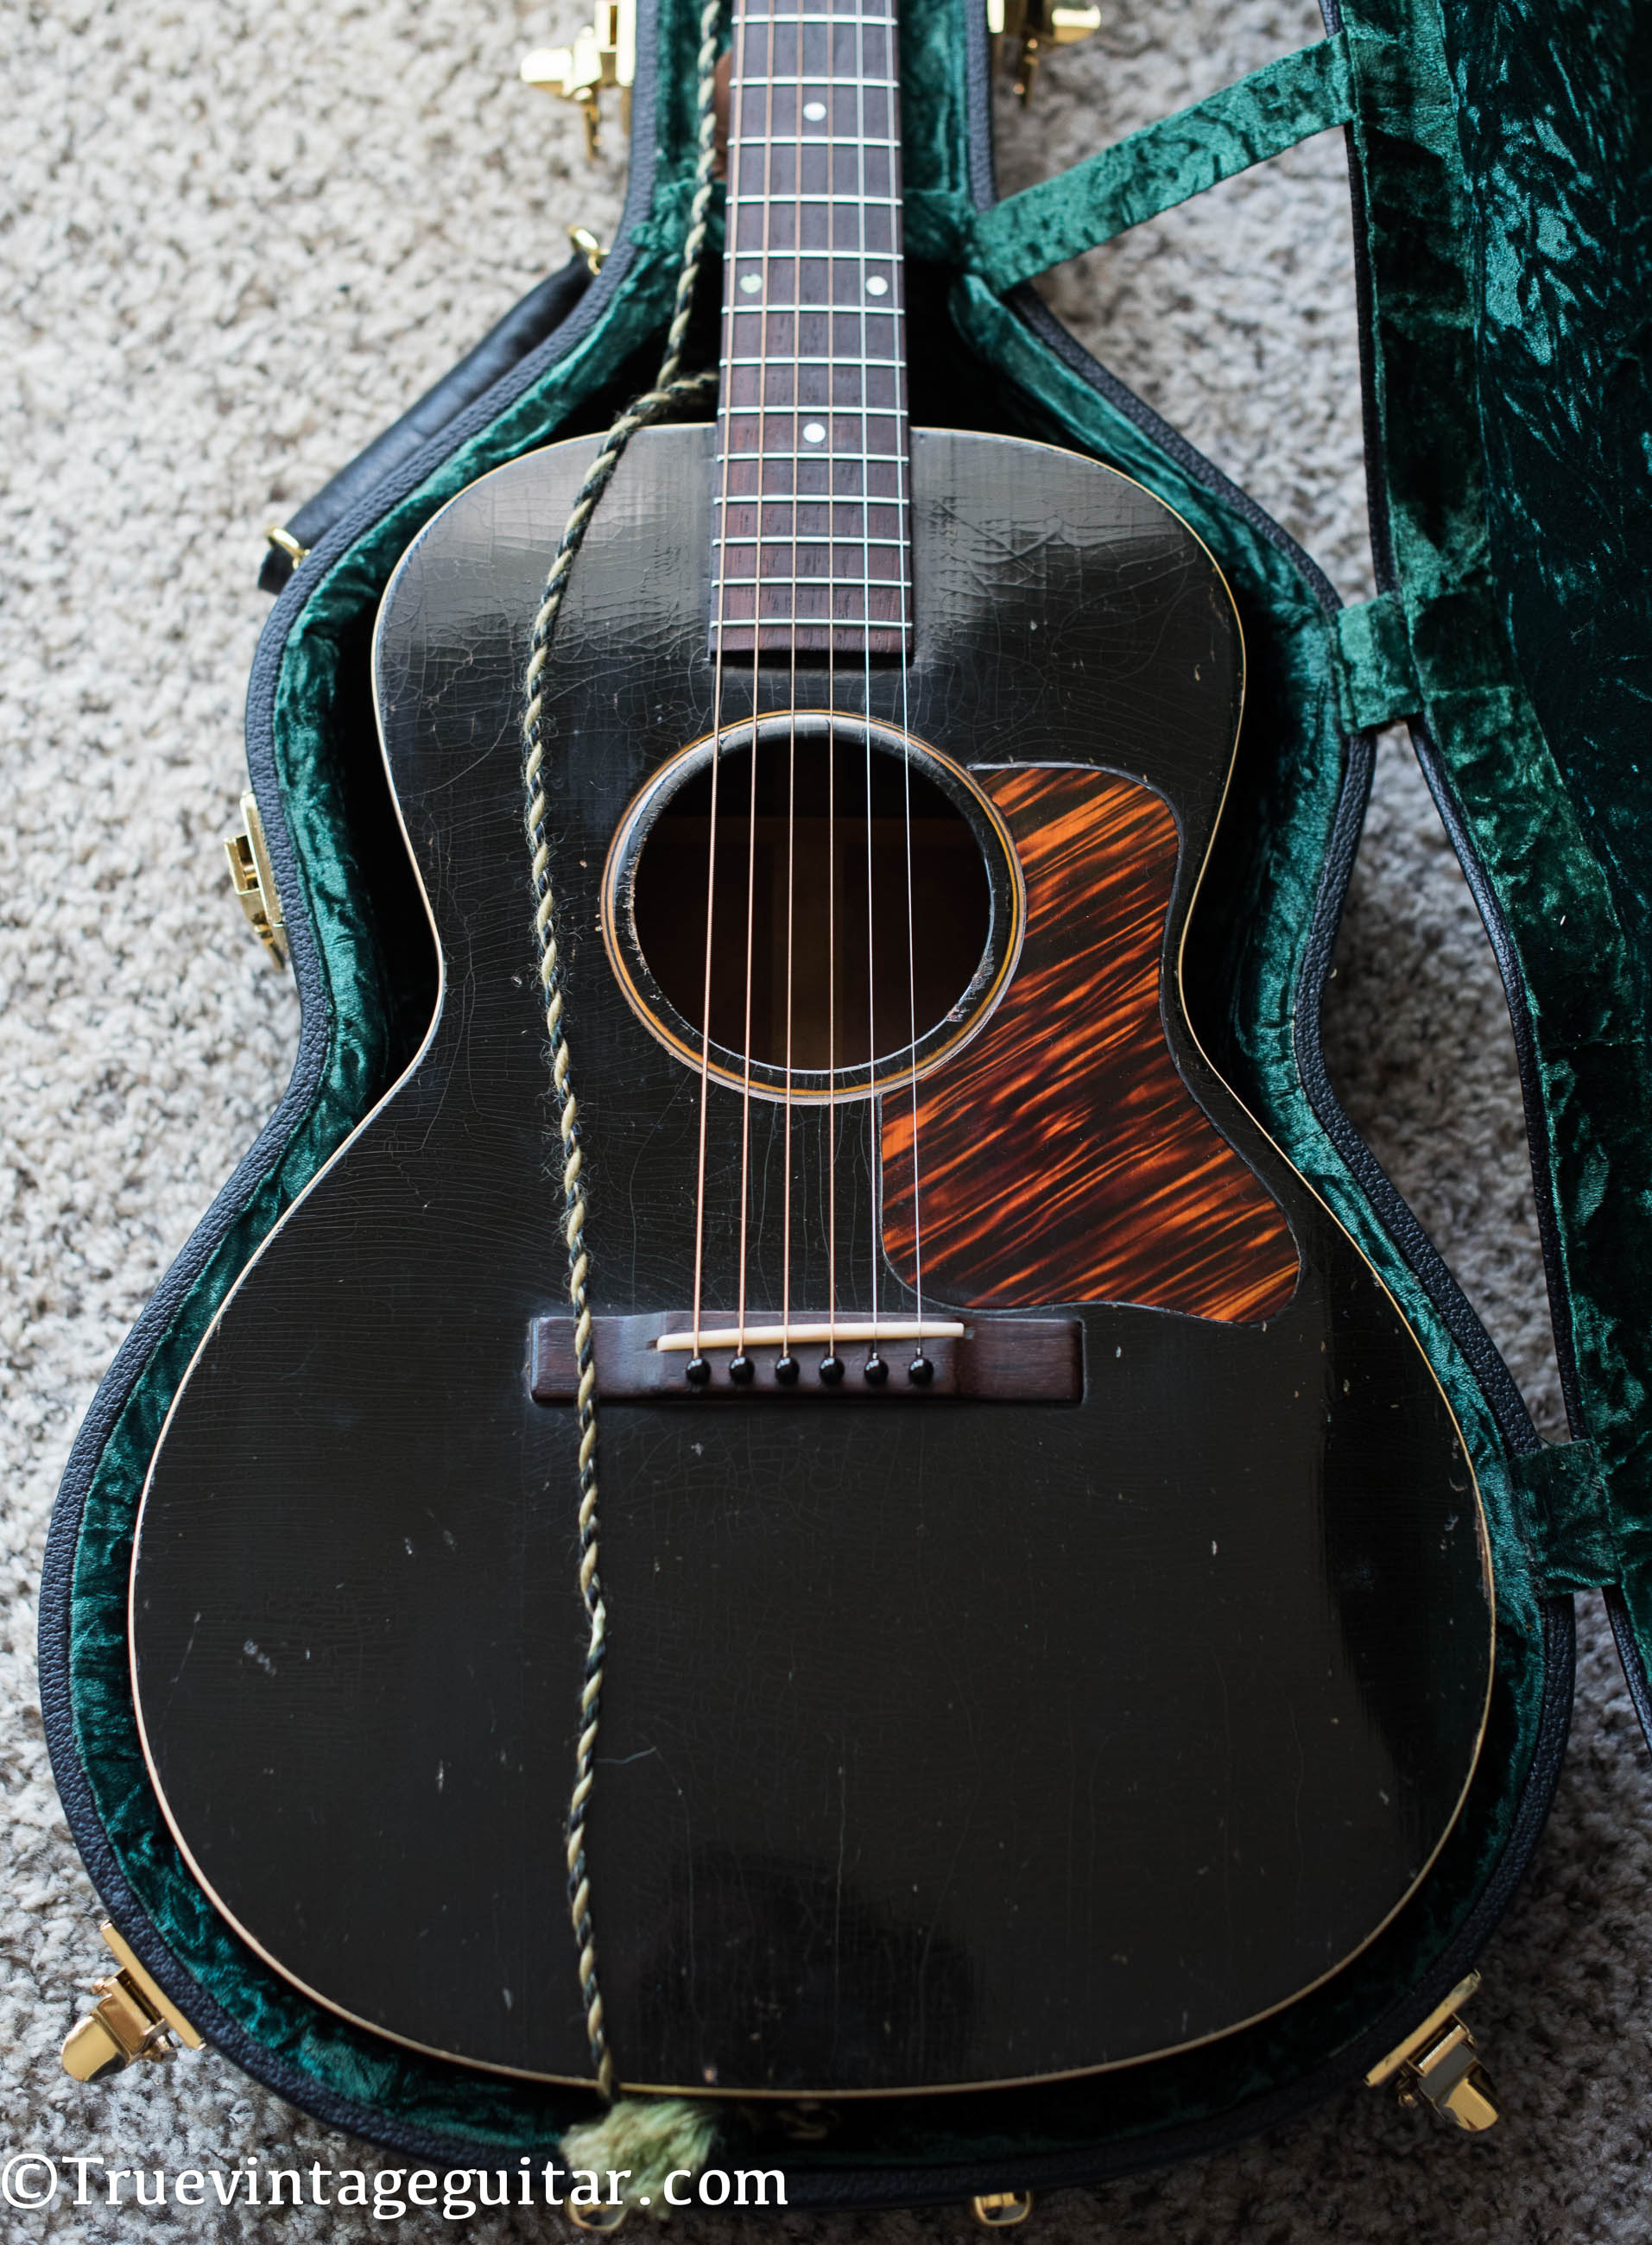 Gibson guitar Black vintage 1930s